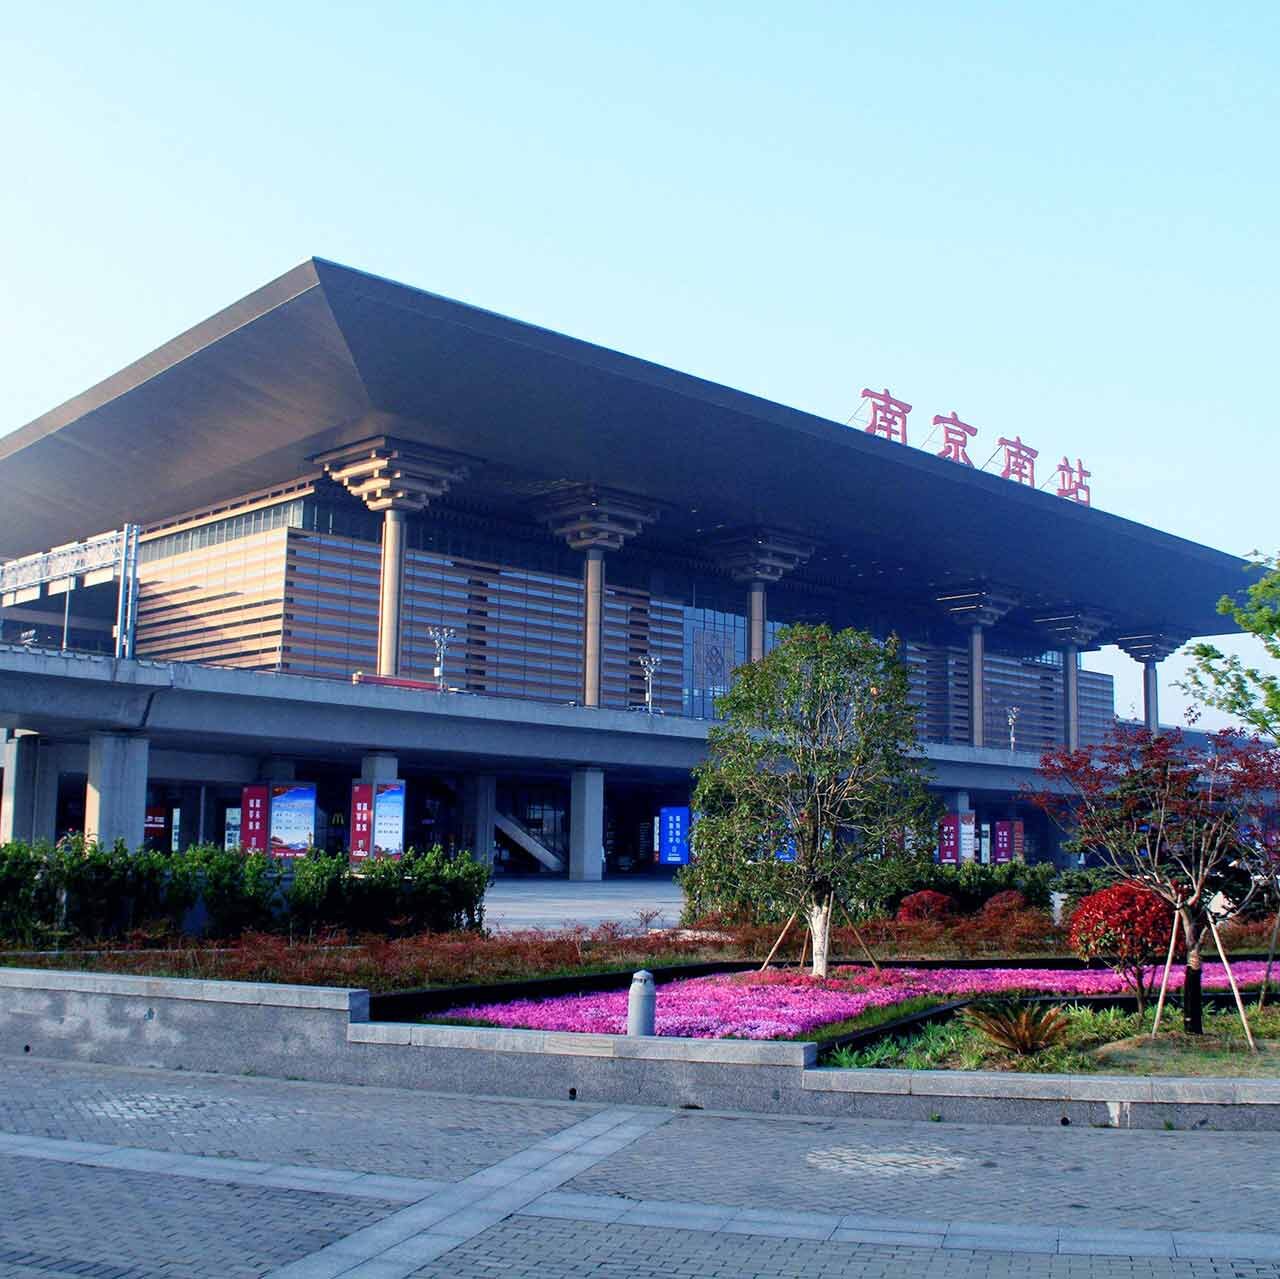 Nanjing south high-speed railway station